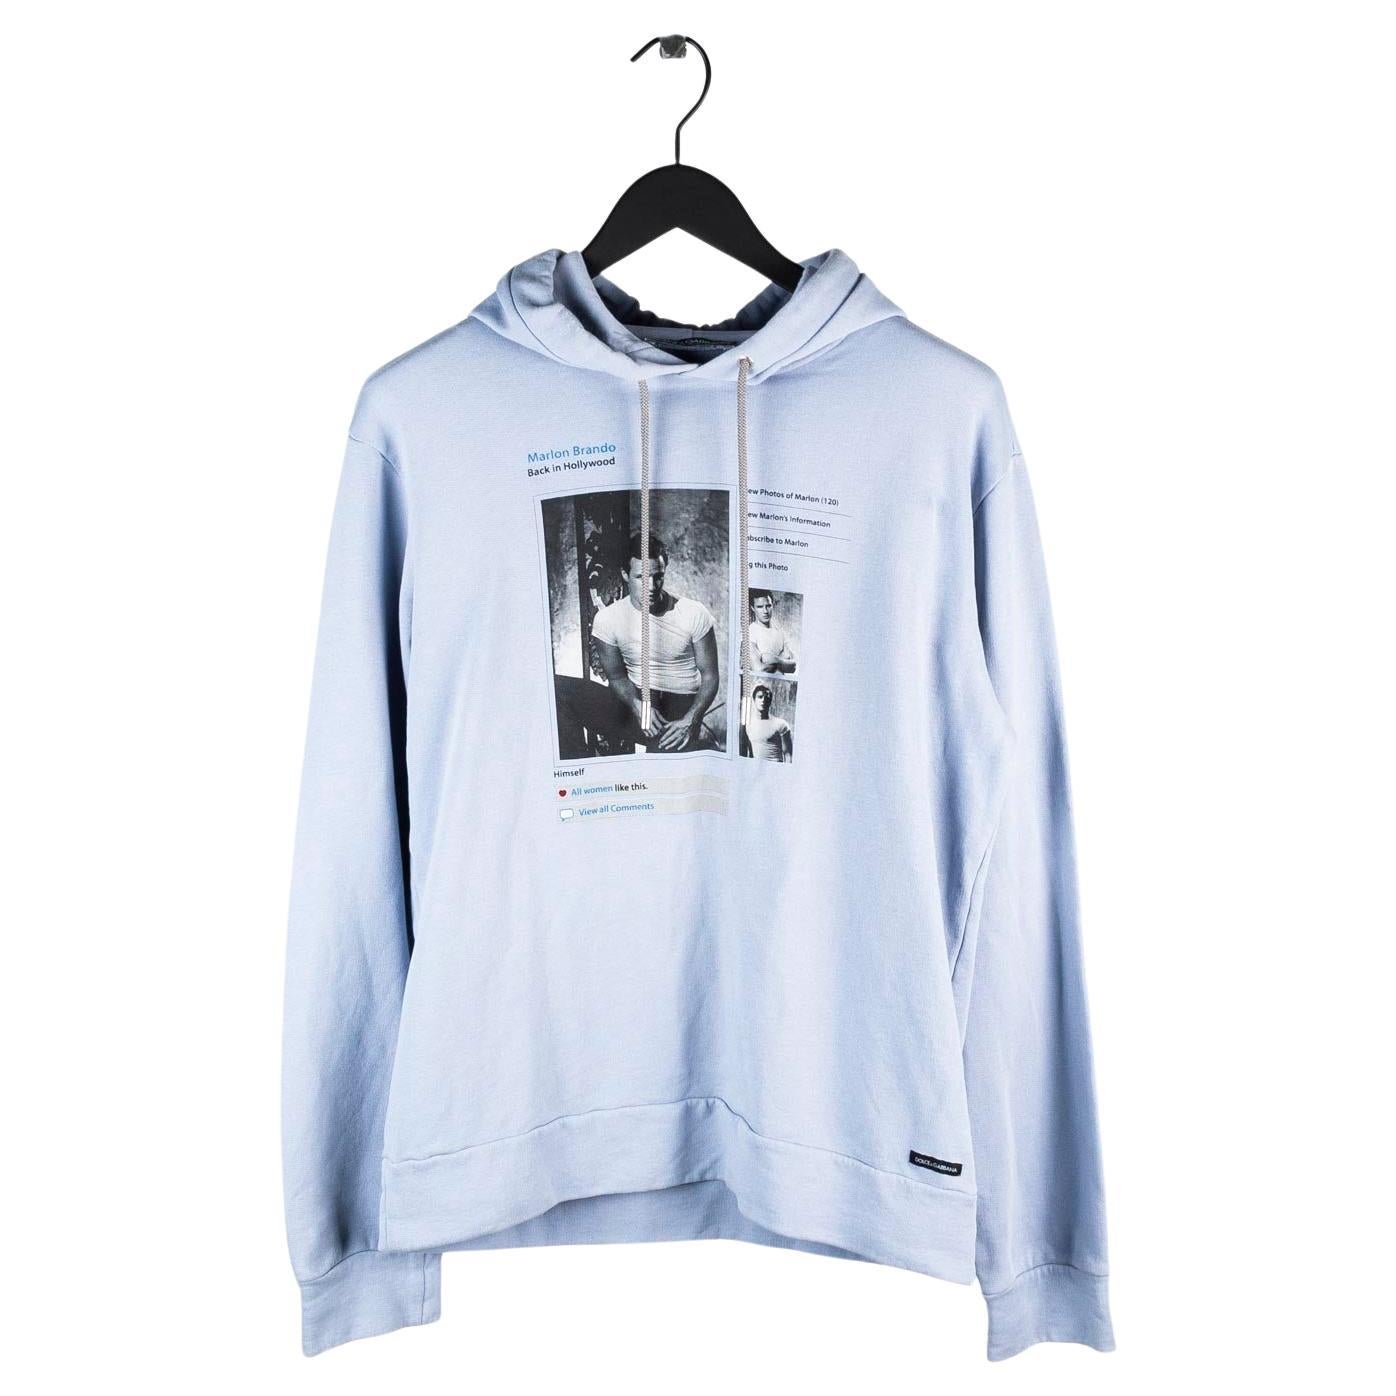 Dolce&Gabbana Marlon Brando Hoodie Sweatshirt Men Jumper Size 48IT, S541 For Sale